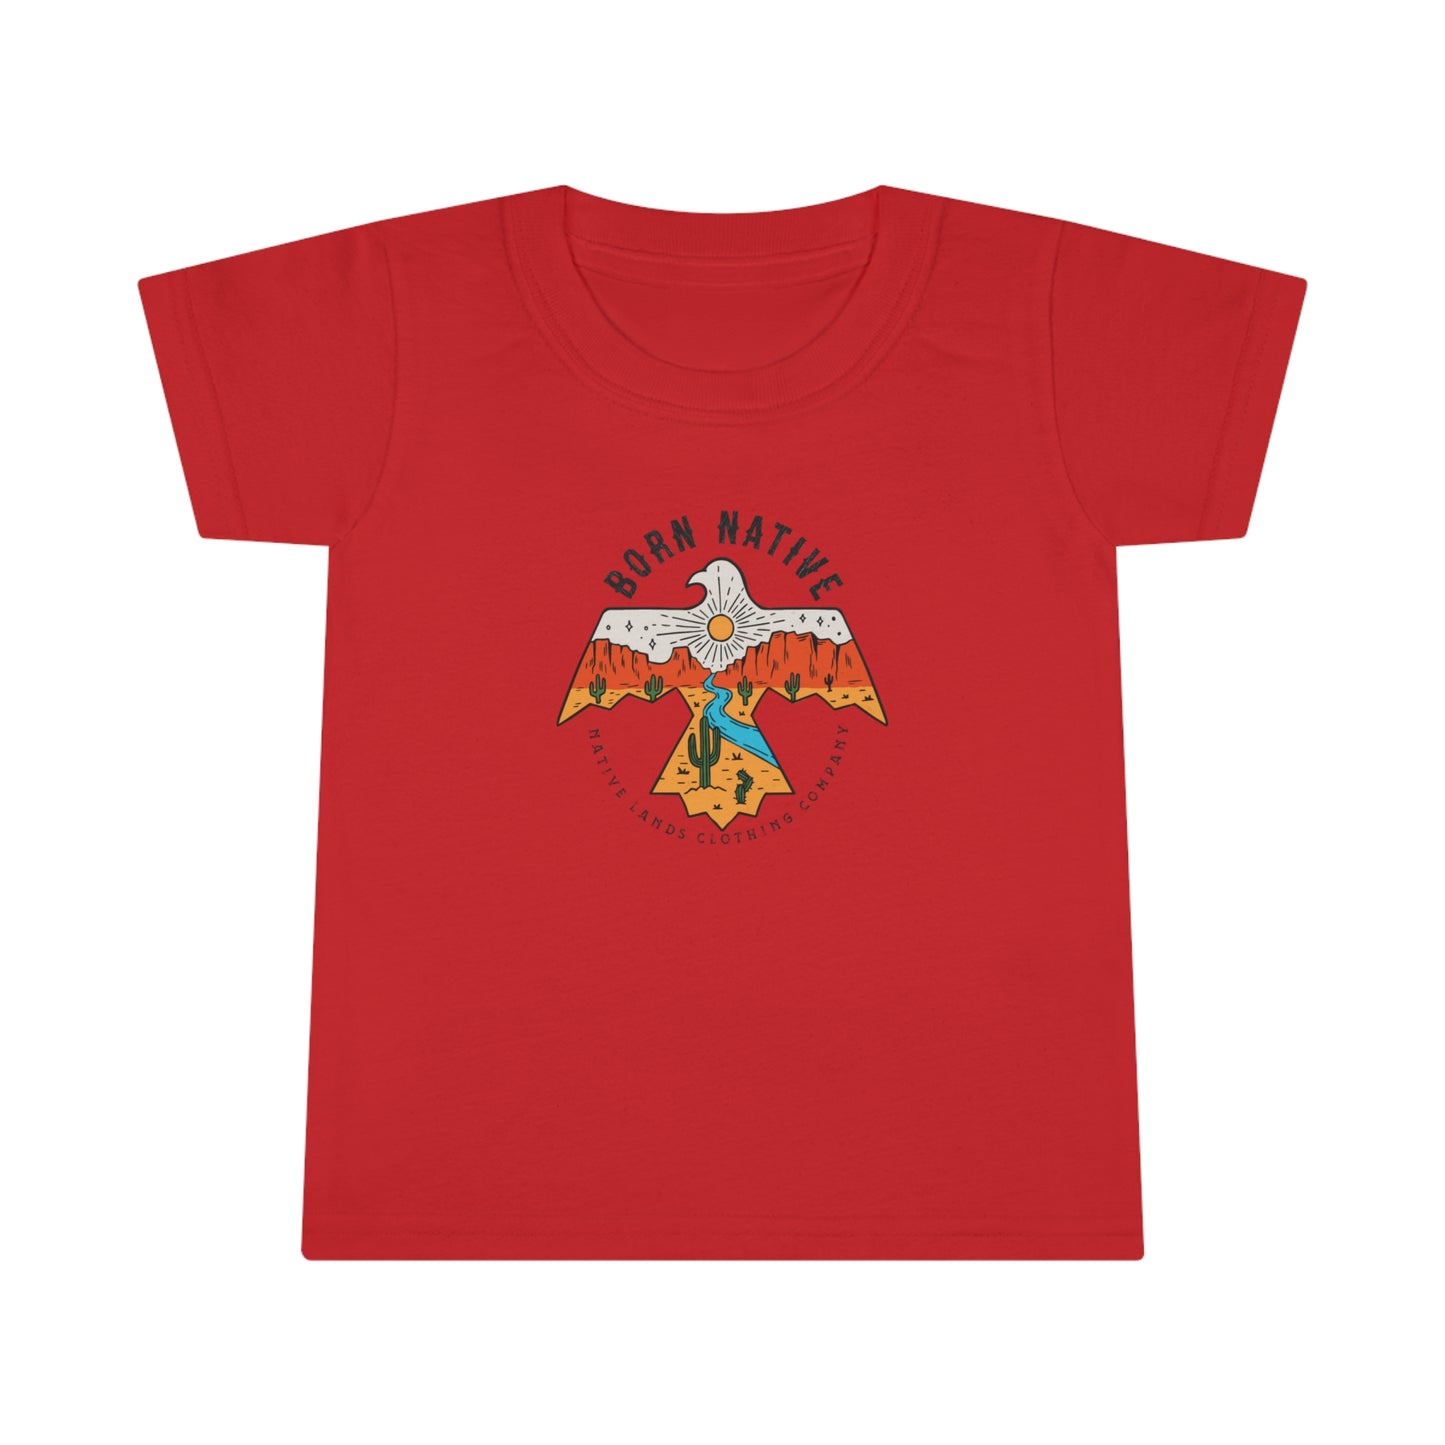 Camisa Thunderbird para niños pequeños Algodón Nativo americano